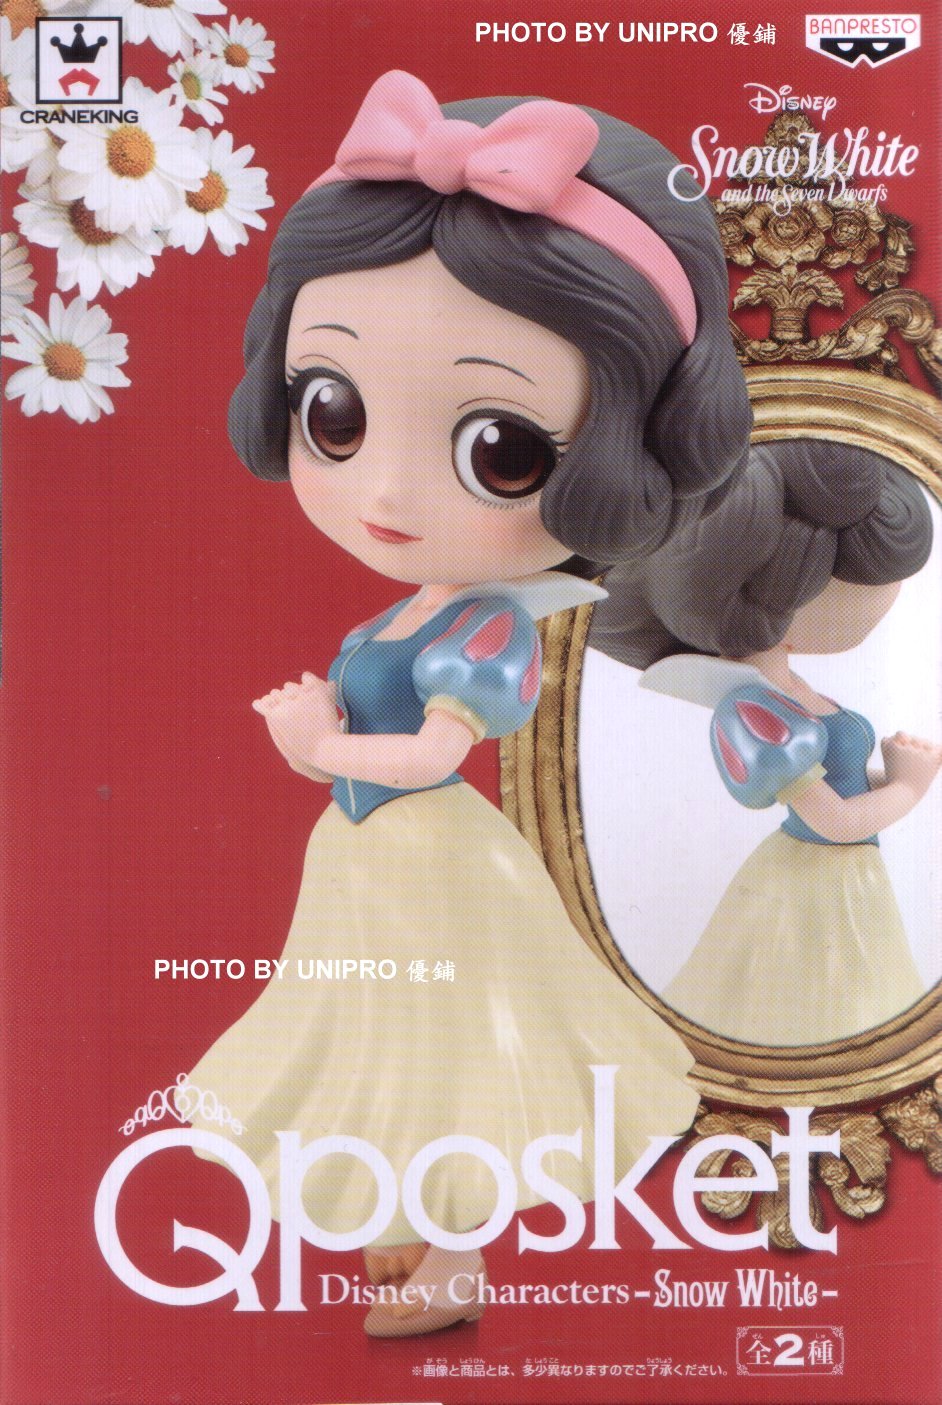 台灣代理版 Q Posket 白雪公主 單售B款 迪士尼 Qposket Disney Characters －Snow White－ 公仔